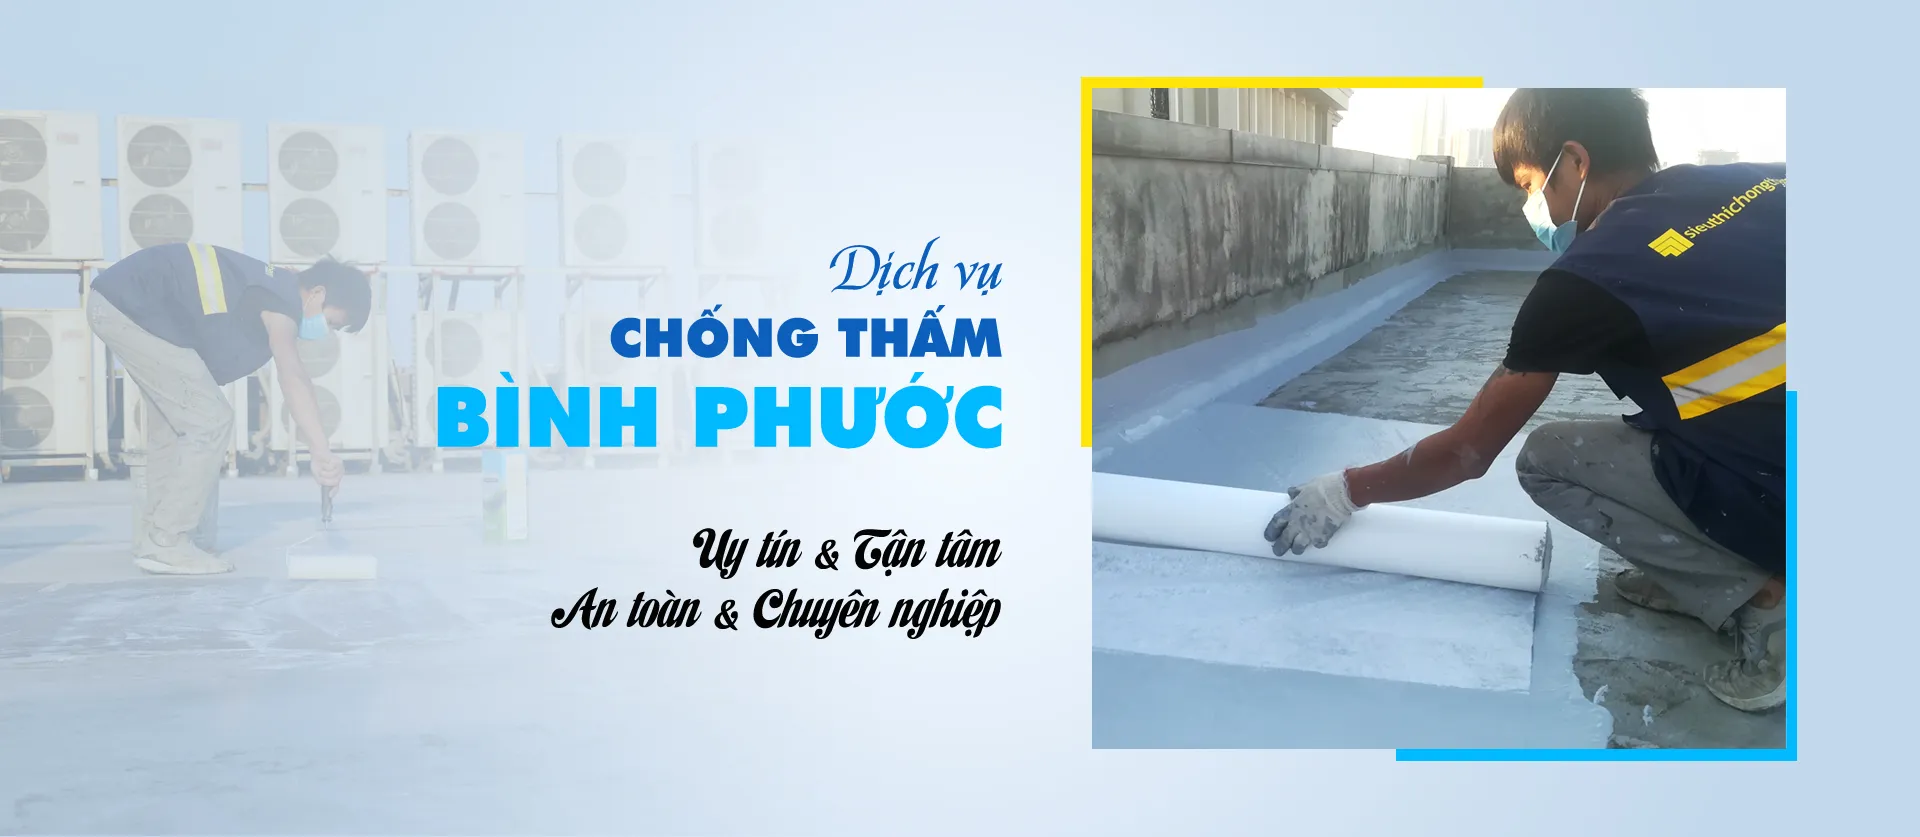 Binh Phuoc